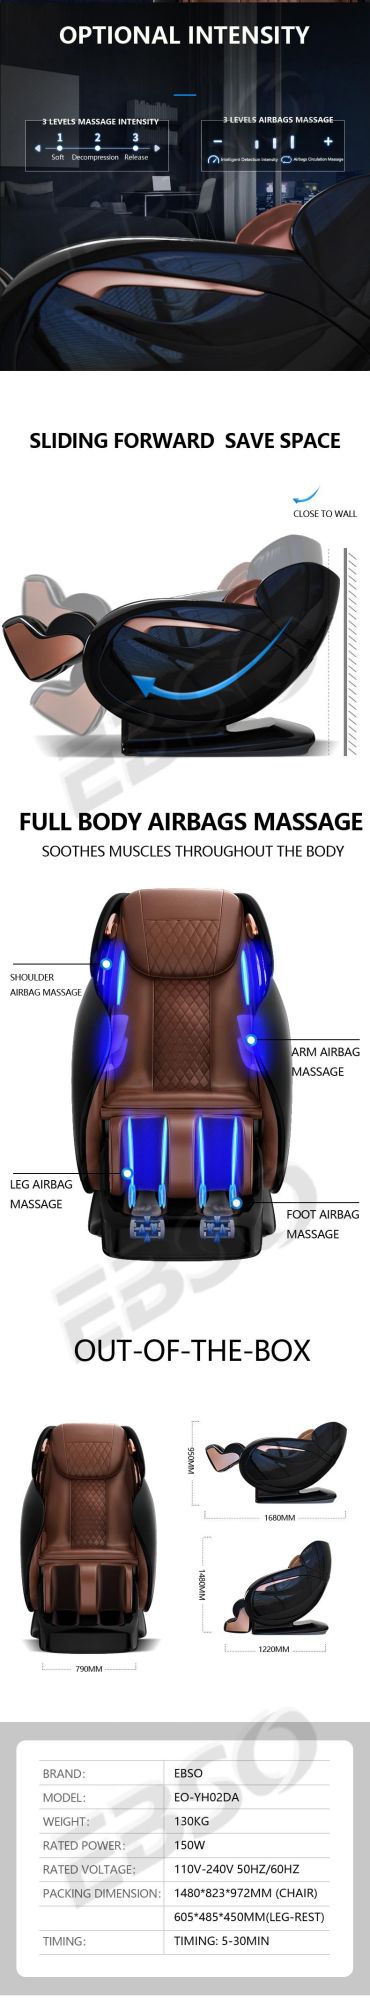 Massage Chair I Rest Massage Chair Full Body Modern Design with Zero Gravity